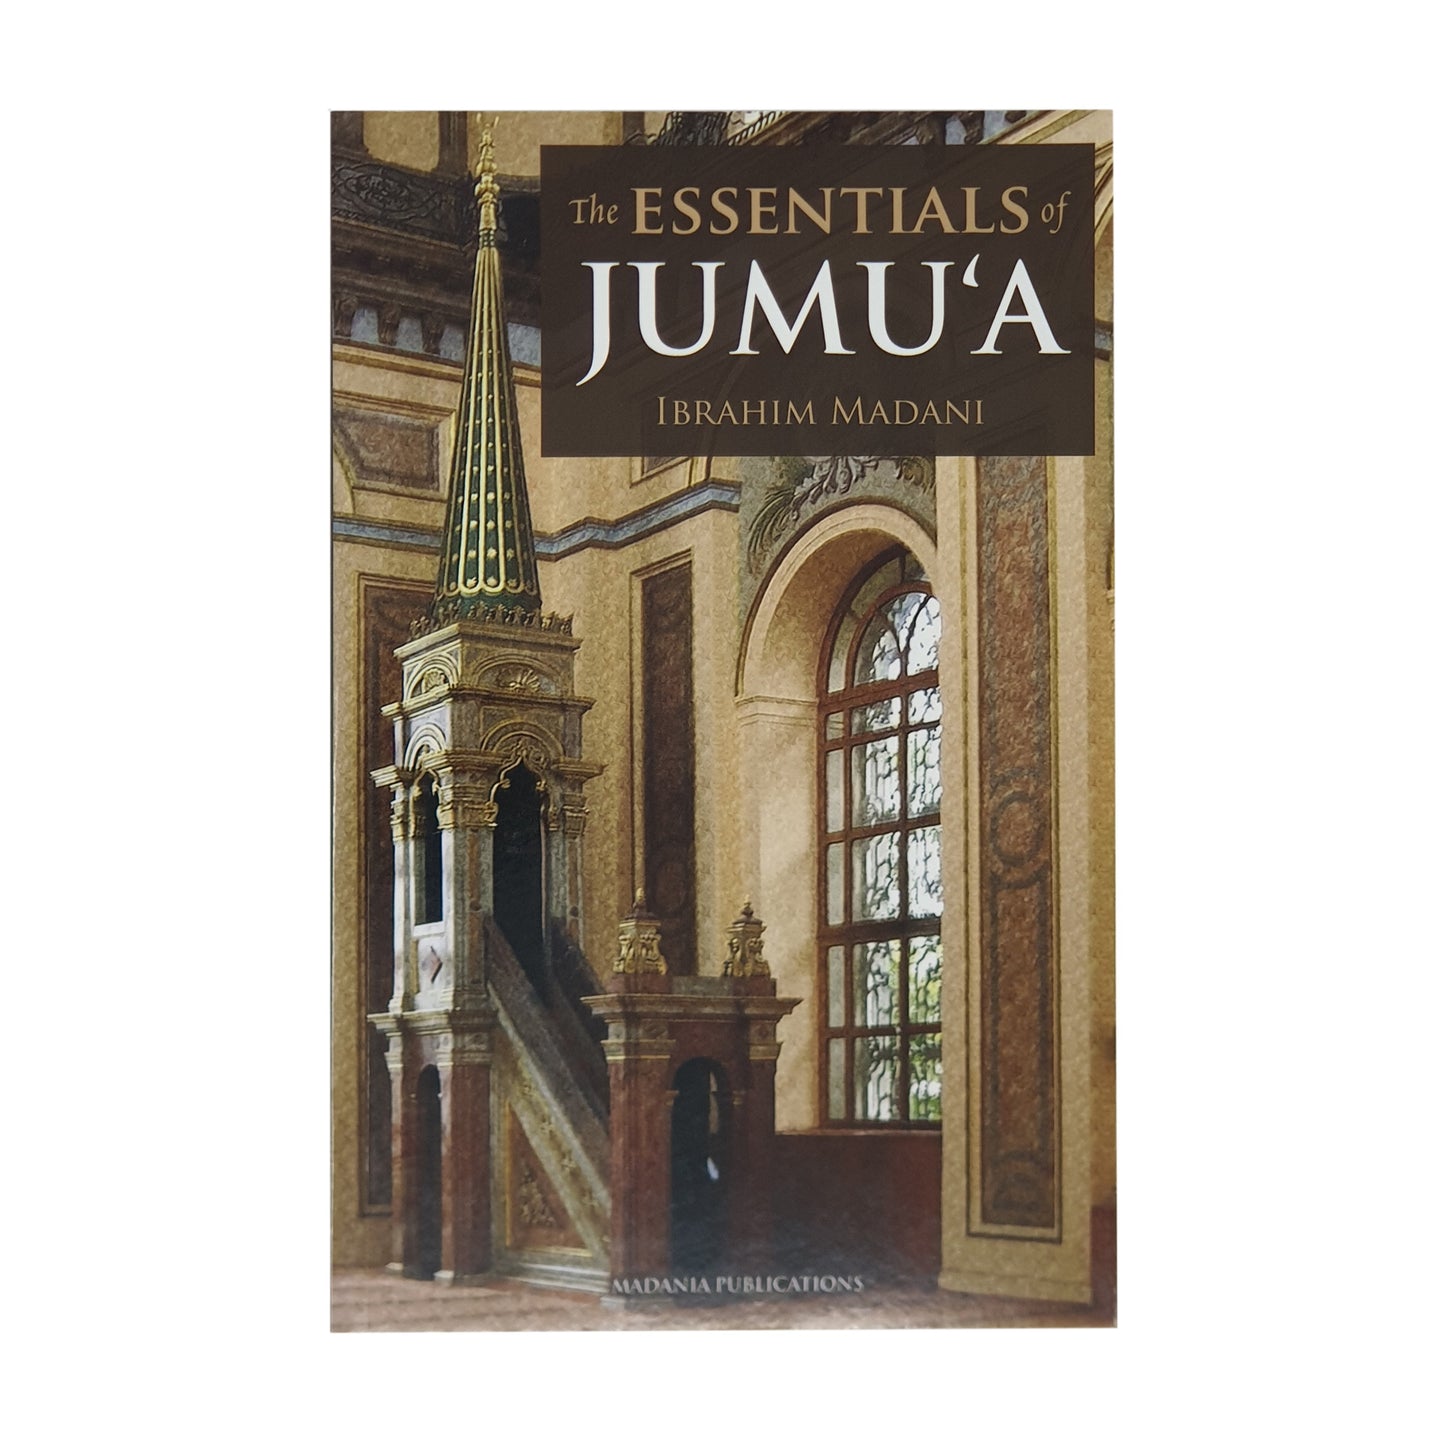 The Essentials of Jumu'a